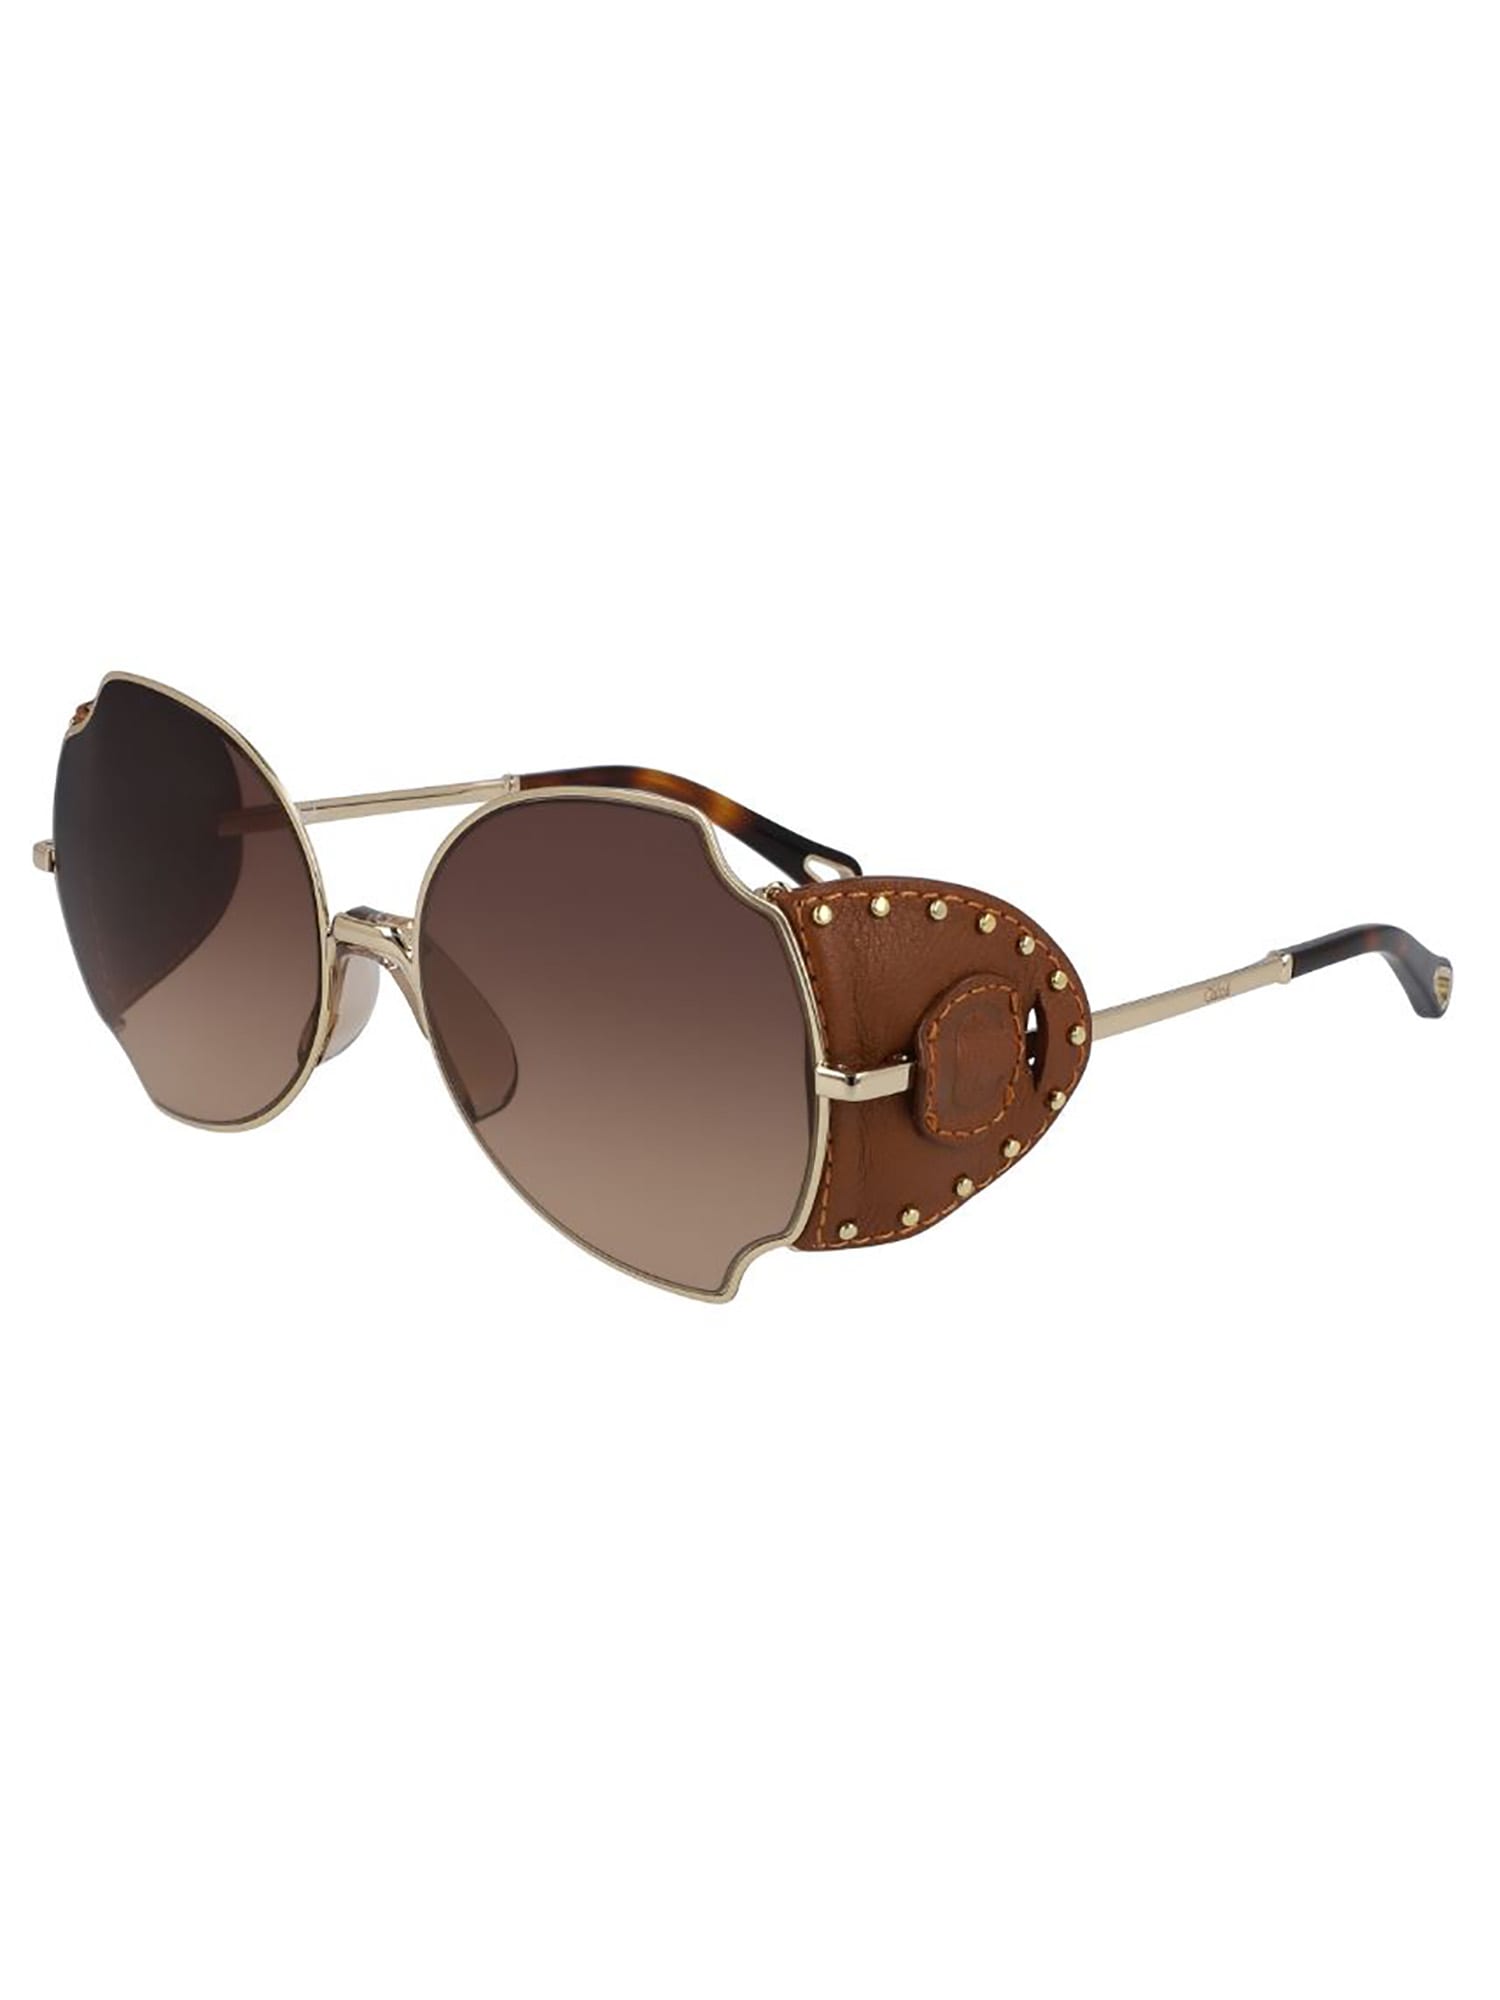 Chloé Ce166sl 42437 Sunglasses In Gold Gradient Brown